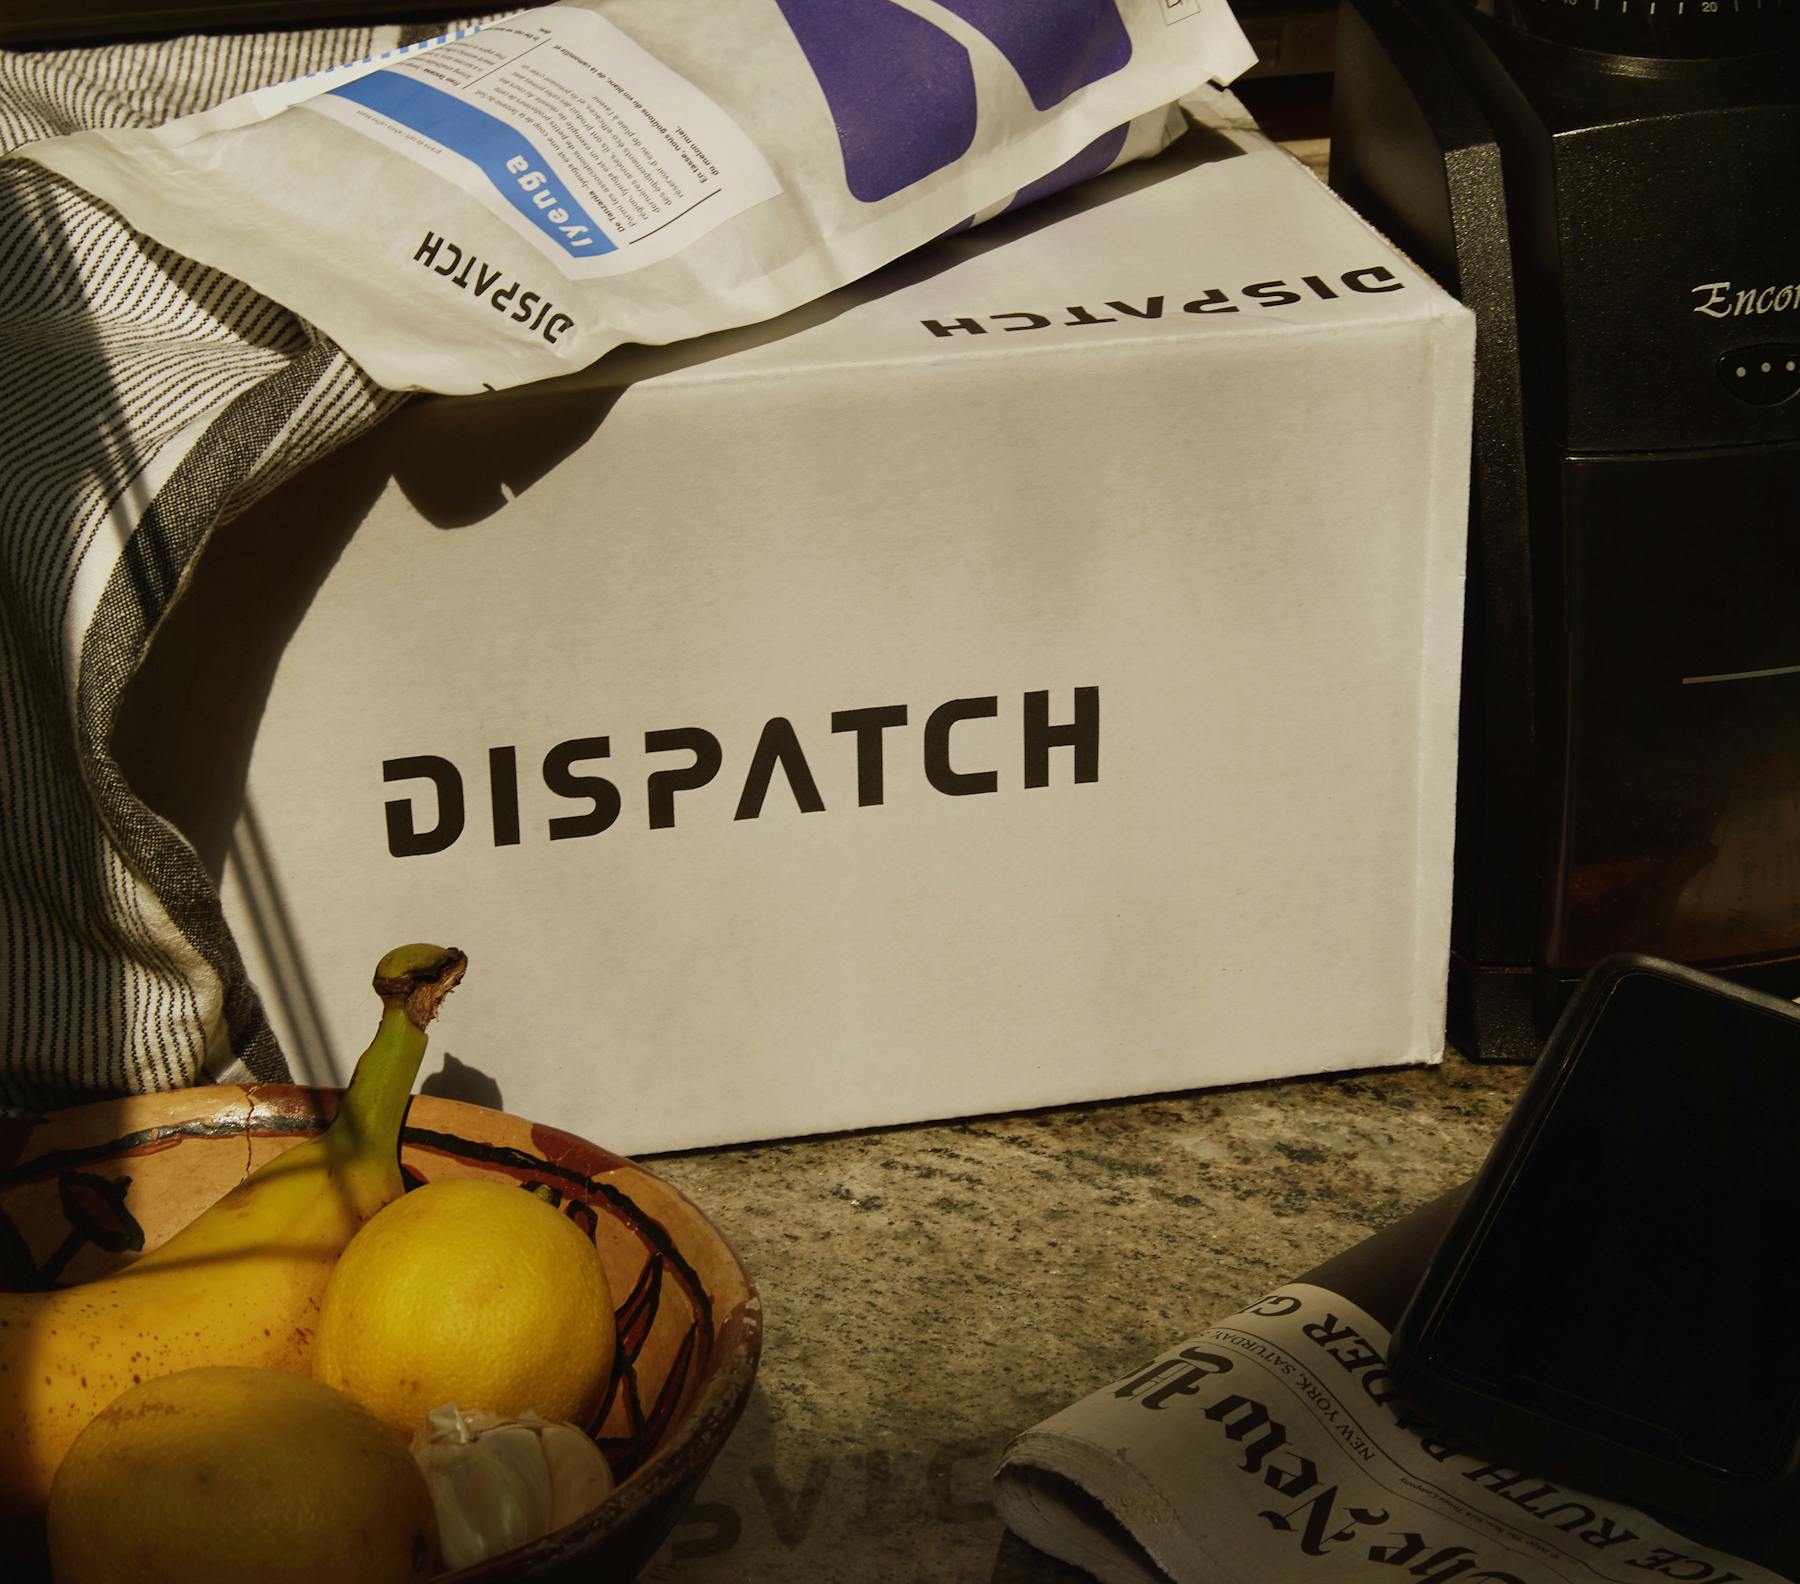 Dispatch Box with NY Times magazine